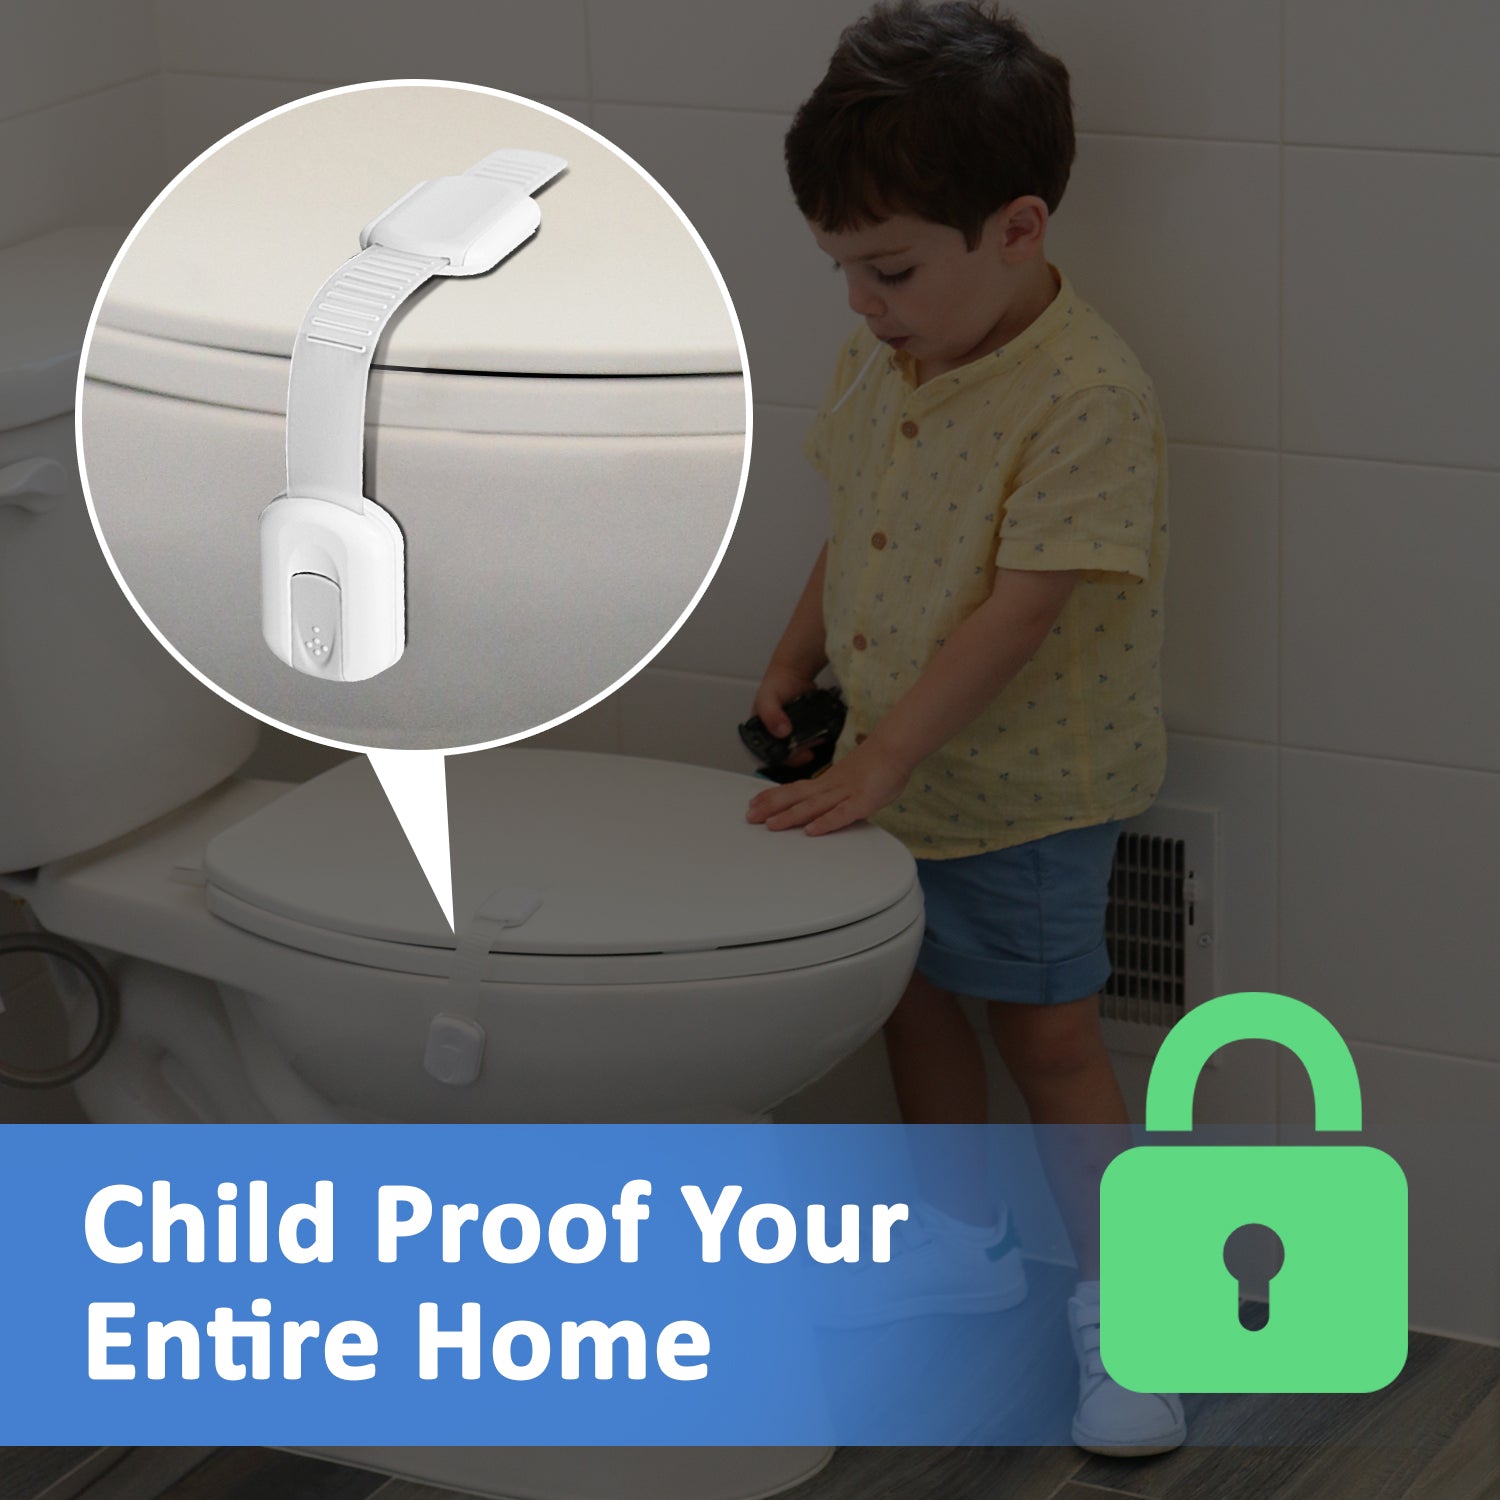 Jool Baby Child Safety Strap Locks for Fridge, Cabinets, Drawers, Toilet, 3M Adhesive White Unisex Child